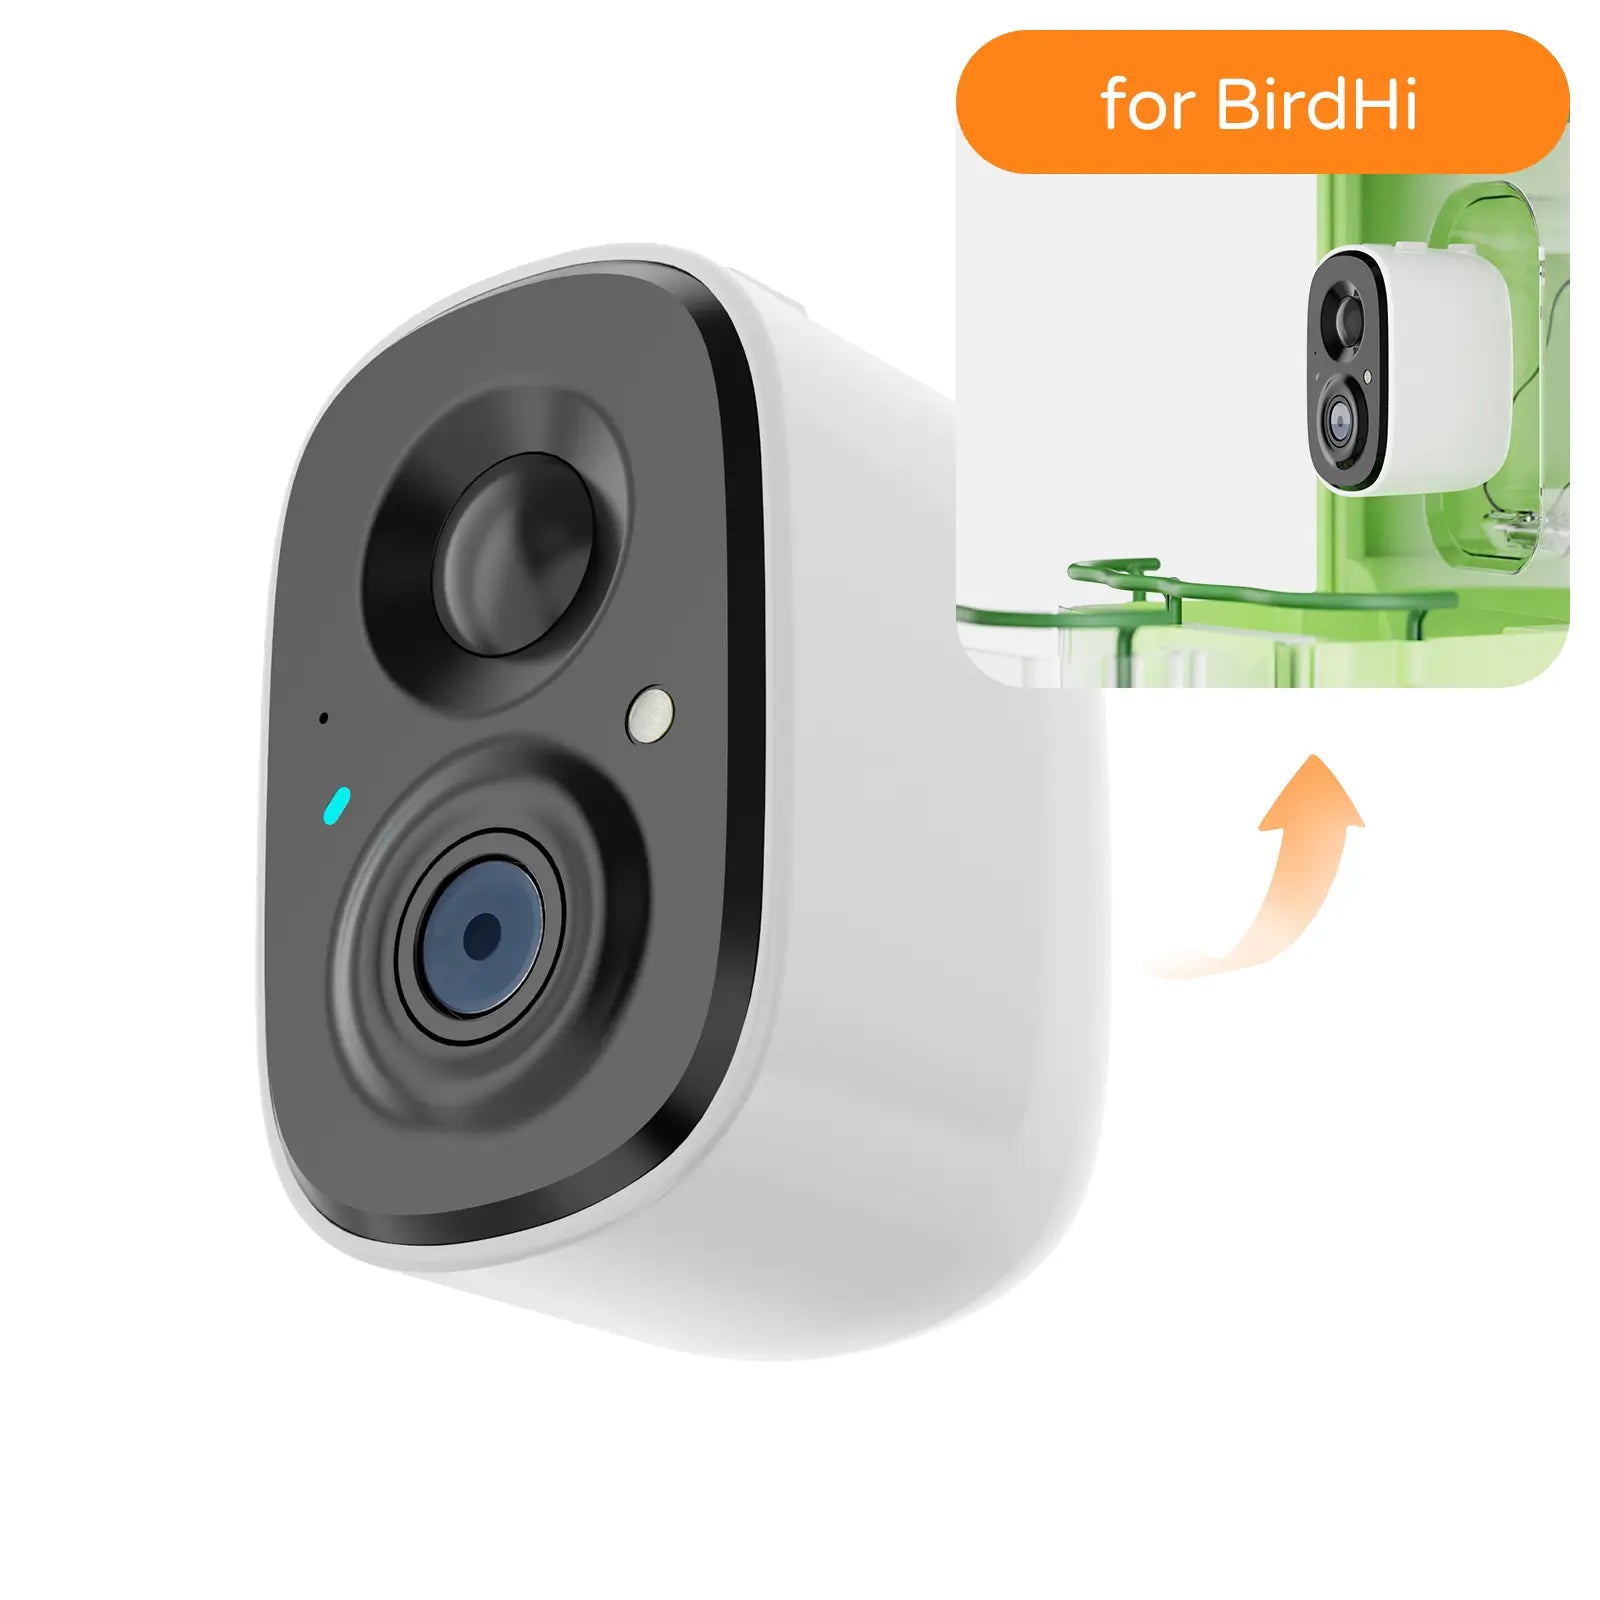 Bilantan bird feeder camera, Smart AI Bird Recognition Camera for BirdHi